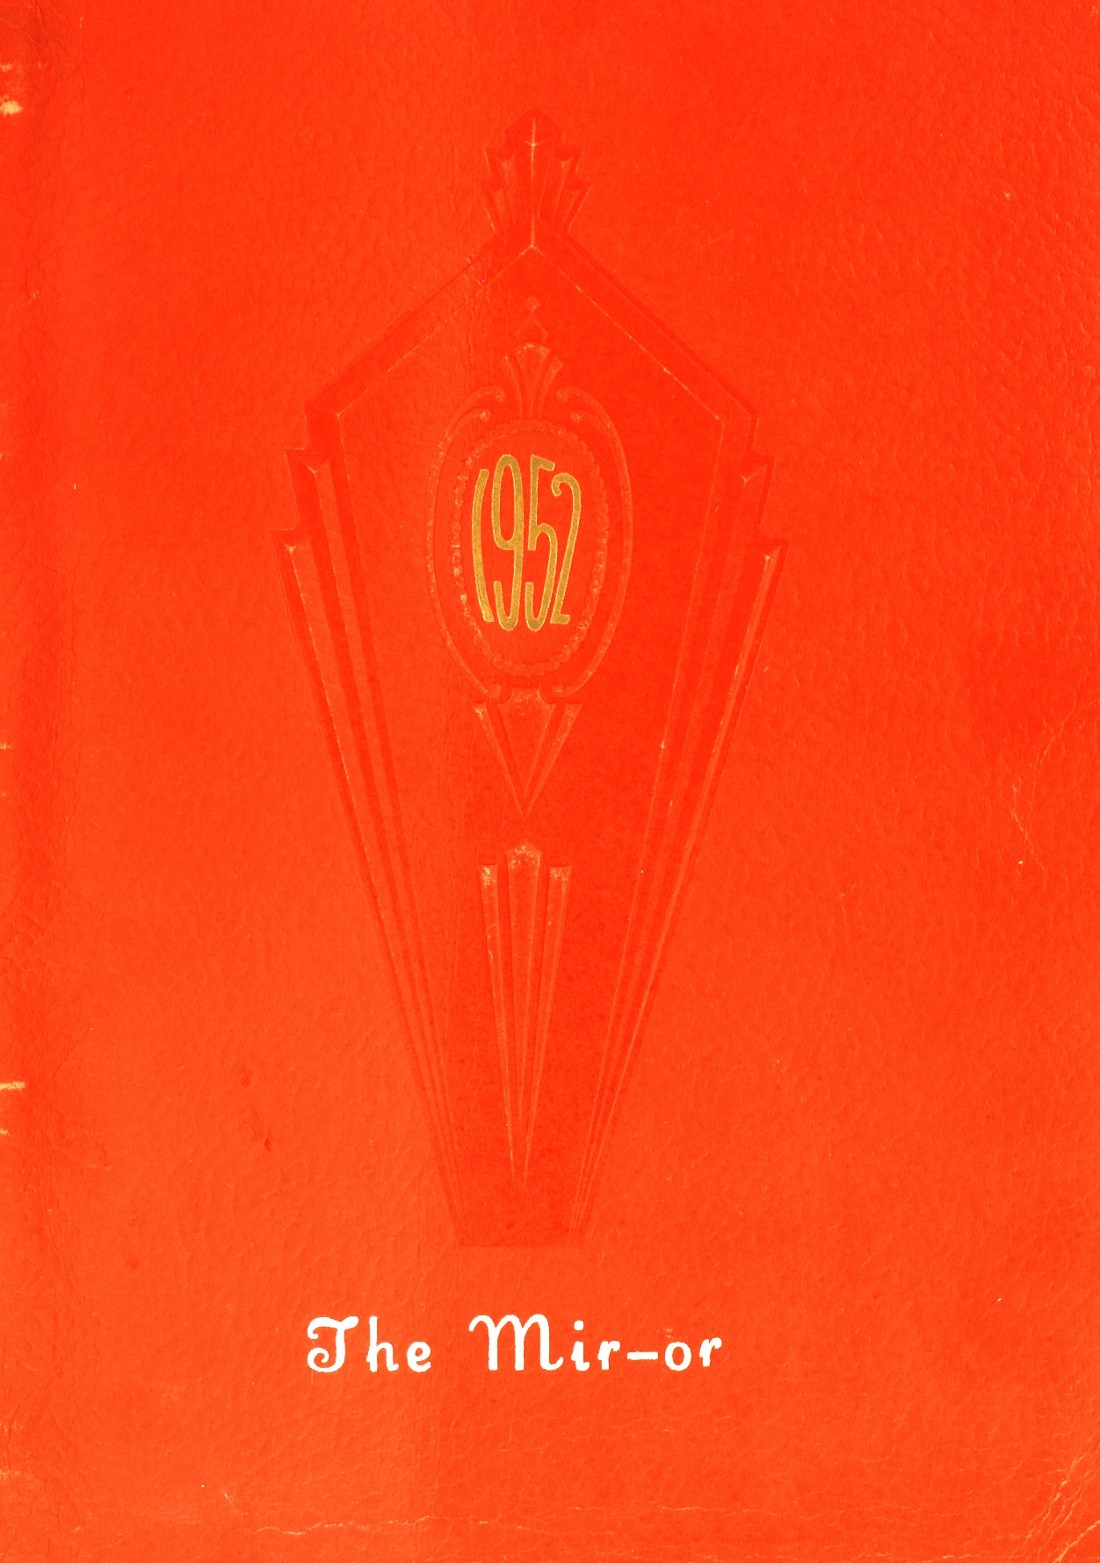 1952 yearbook from John R. Mott High School from Postville, Iowa for sale